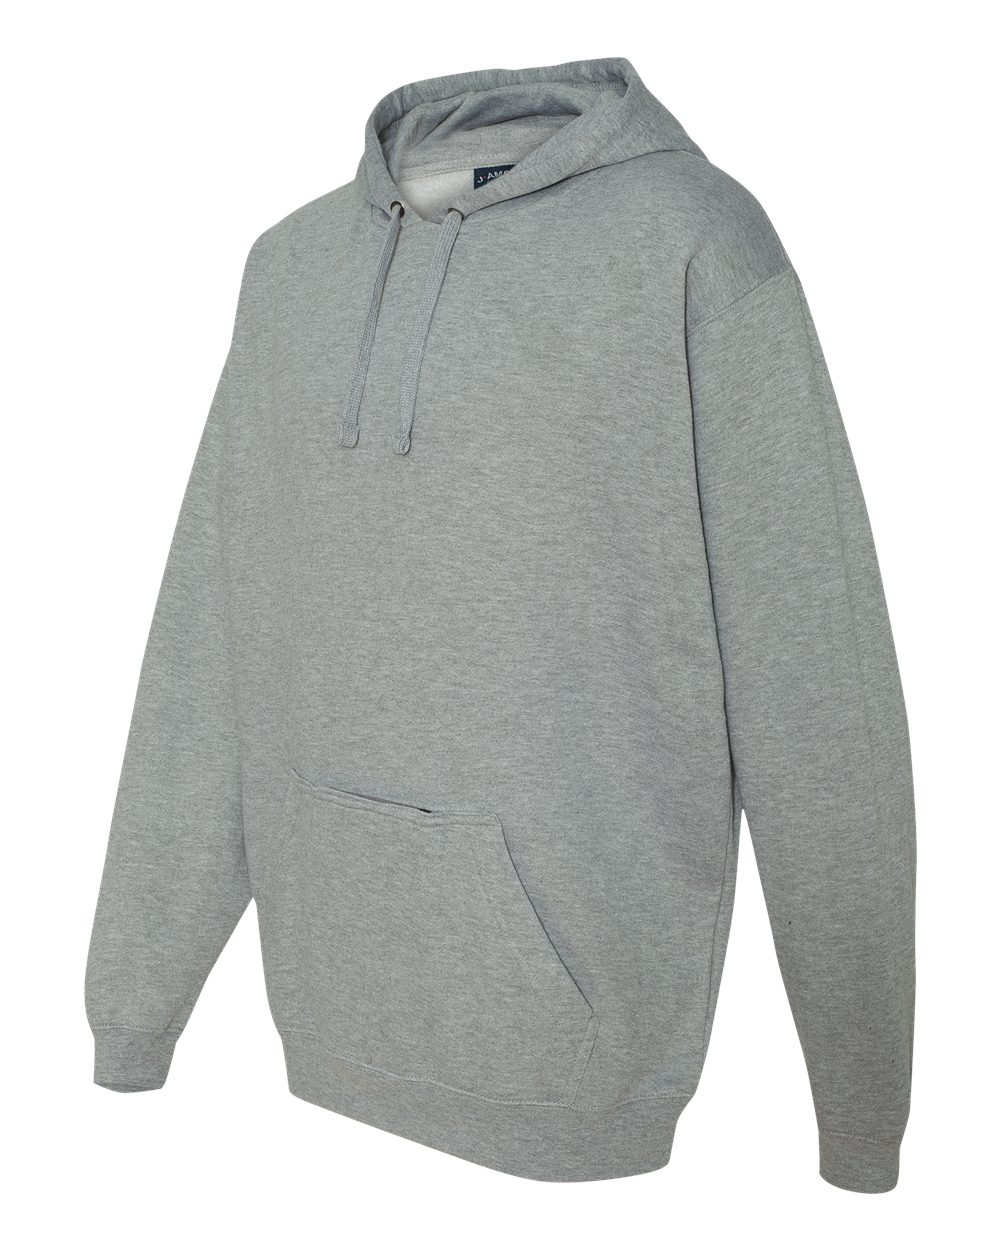 J. America Tailgate Hooded Sweatshirt - 8815